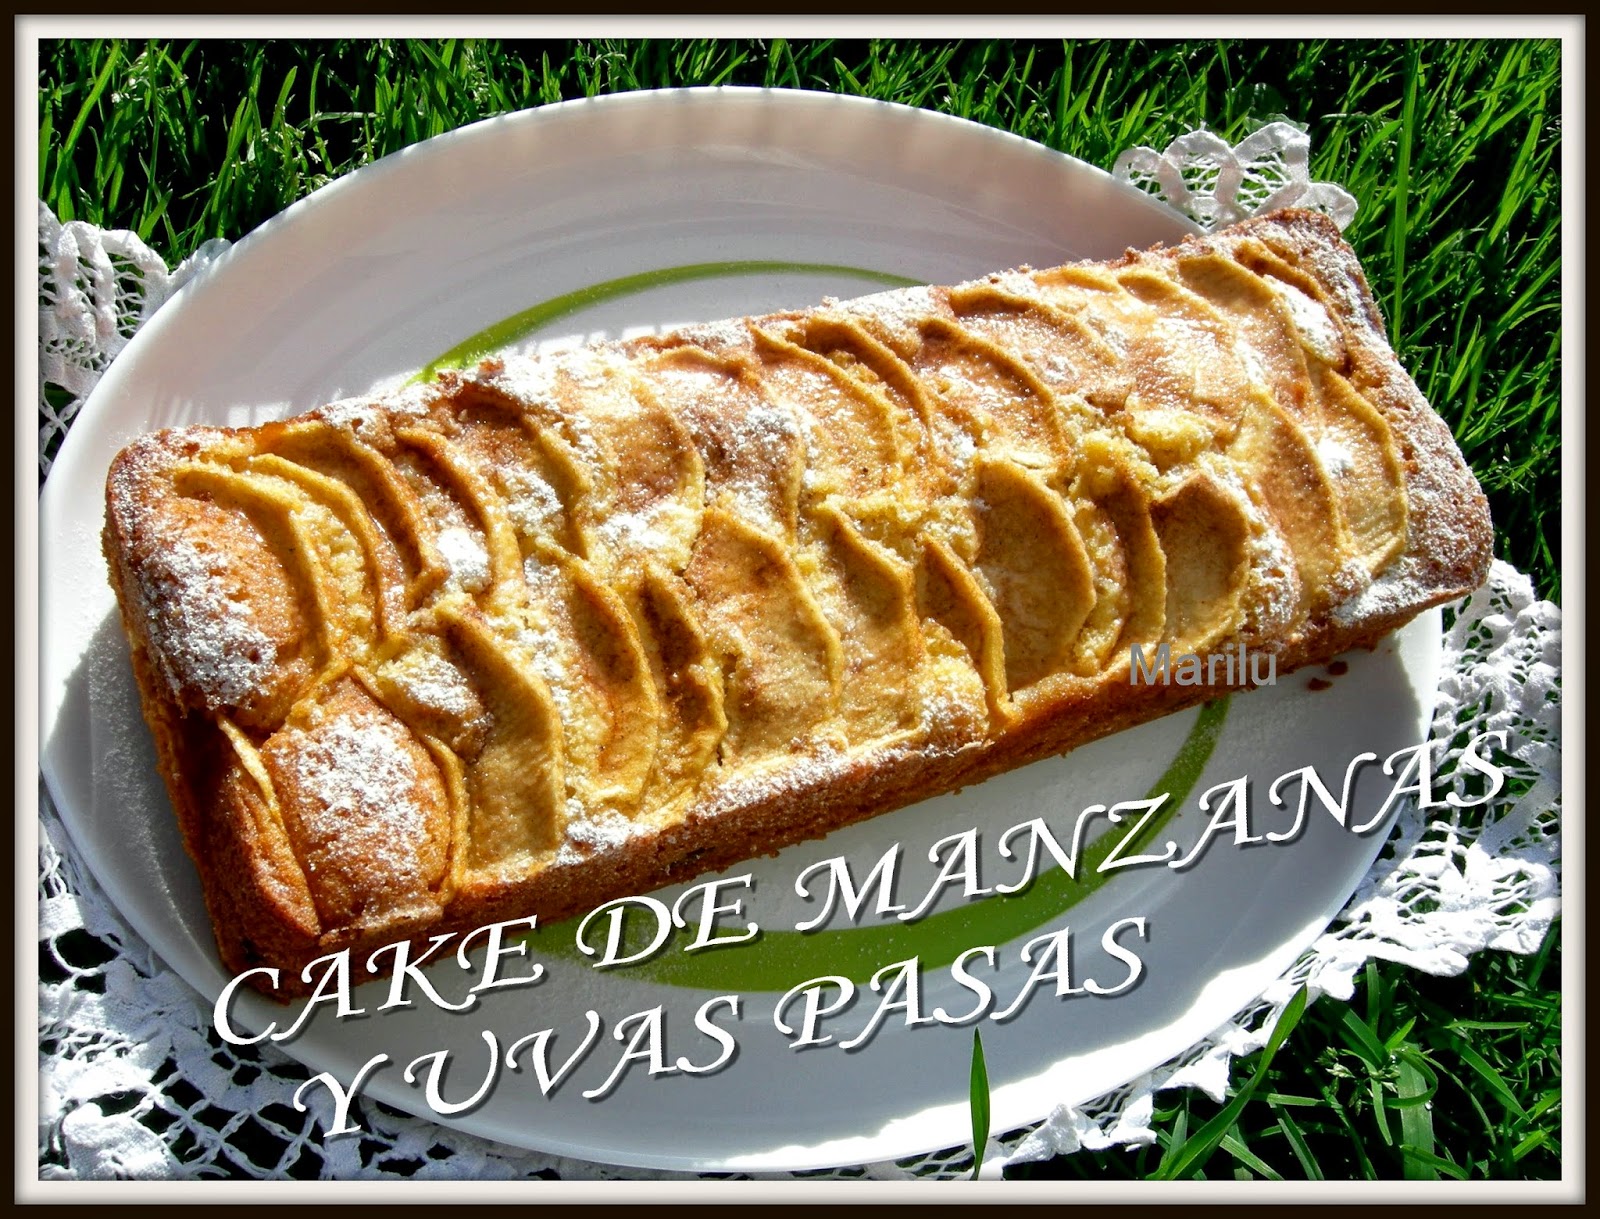 Cake De Manzanas Y Uvas Pasas
